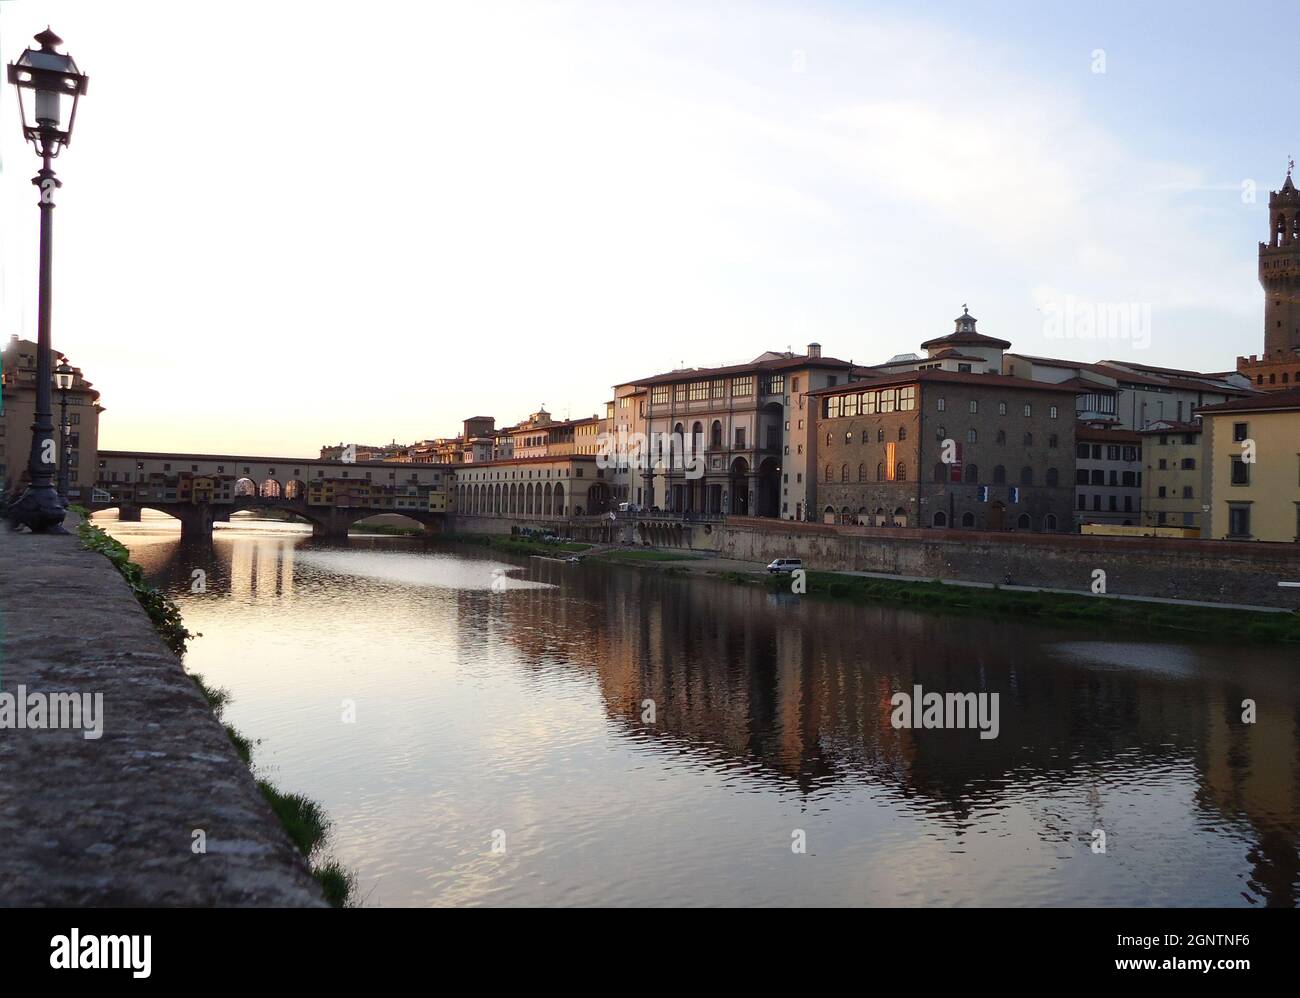 Lansdcape of Firenze, Italy Stock Photo